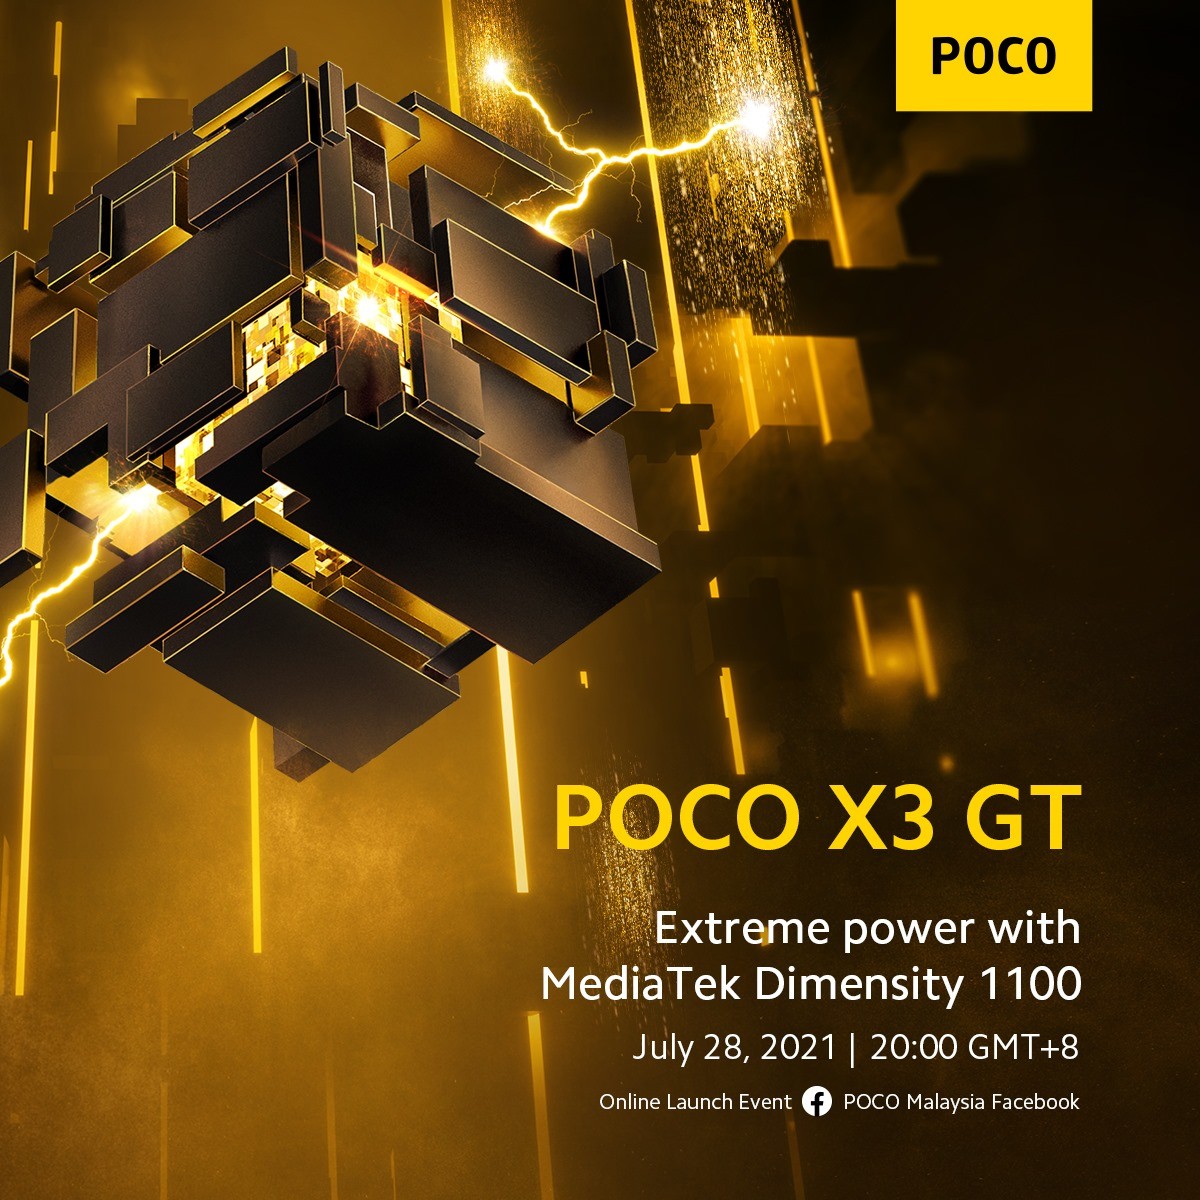 Poco X3 GT's design confirmed through renders, Dimensity 1100 also verified